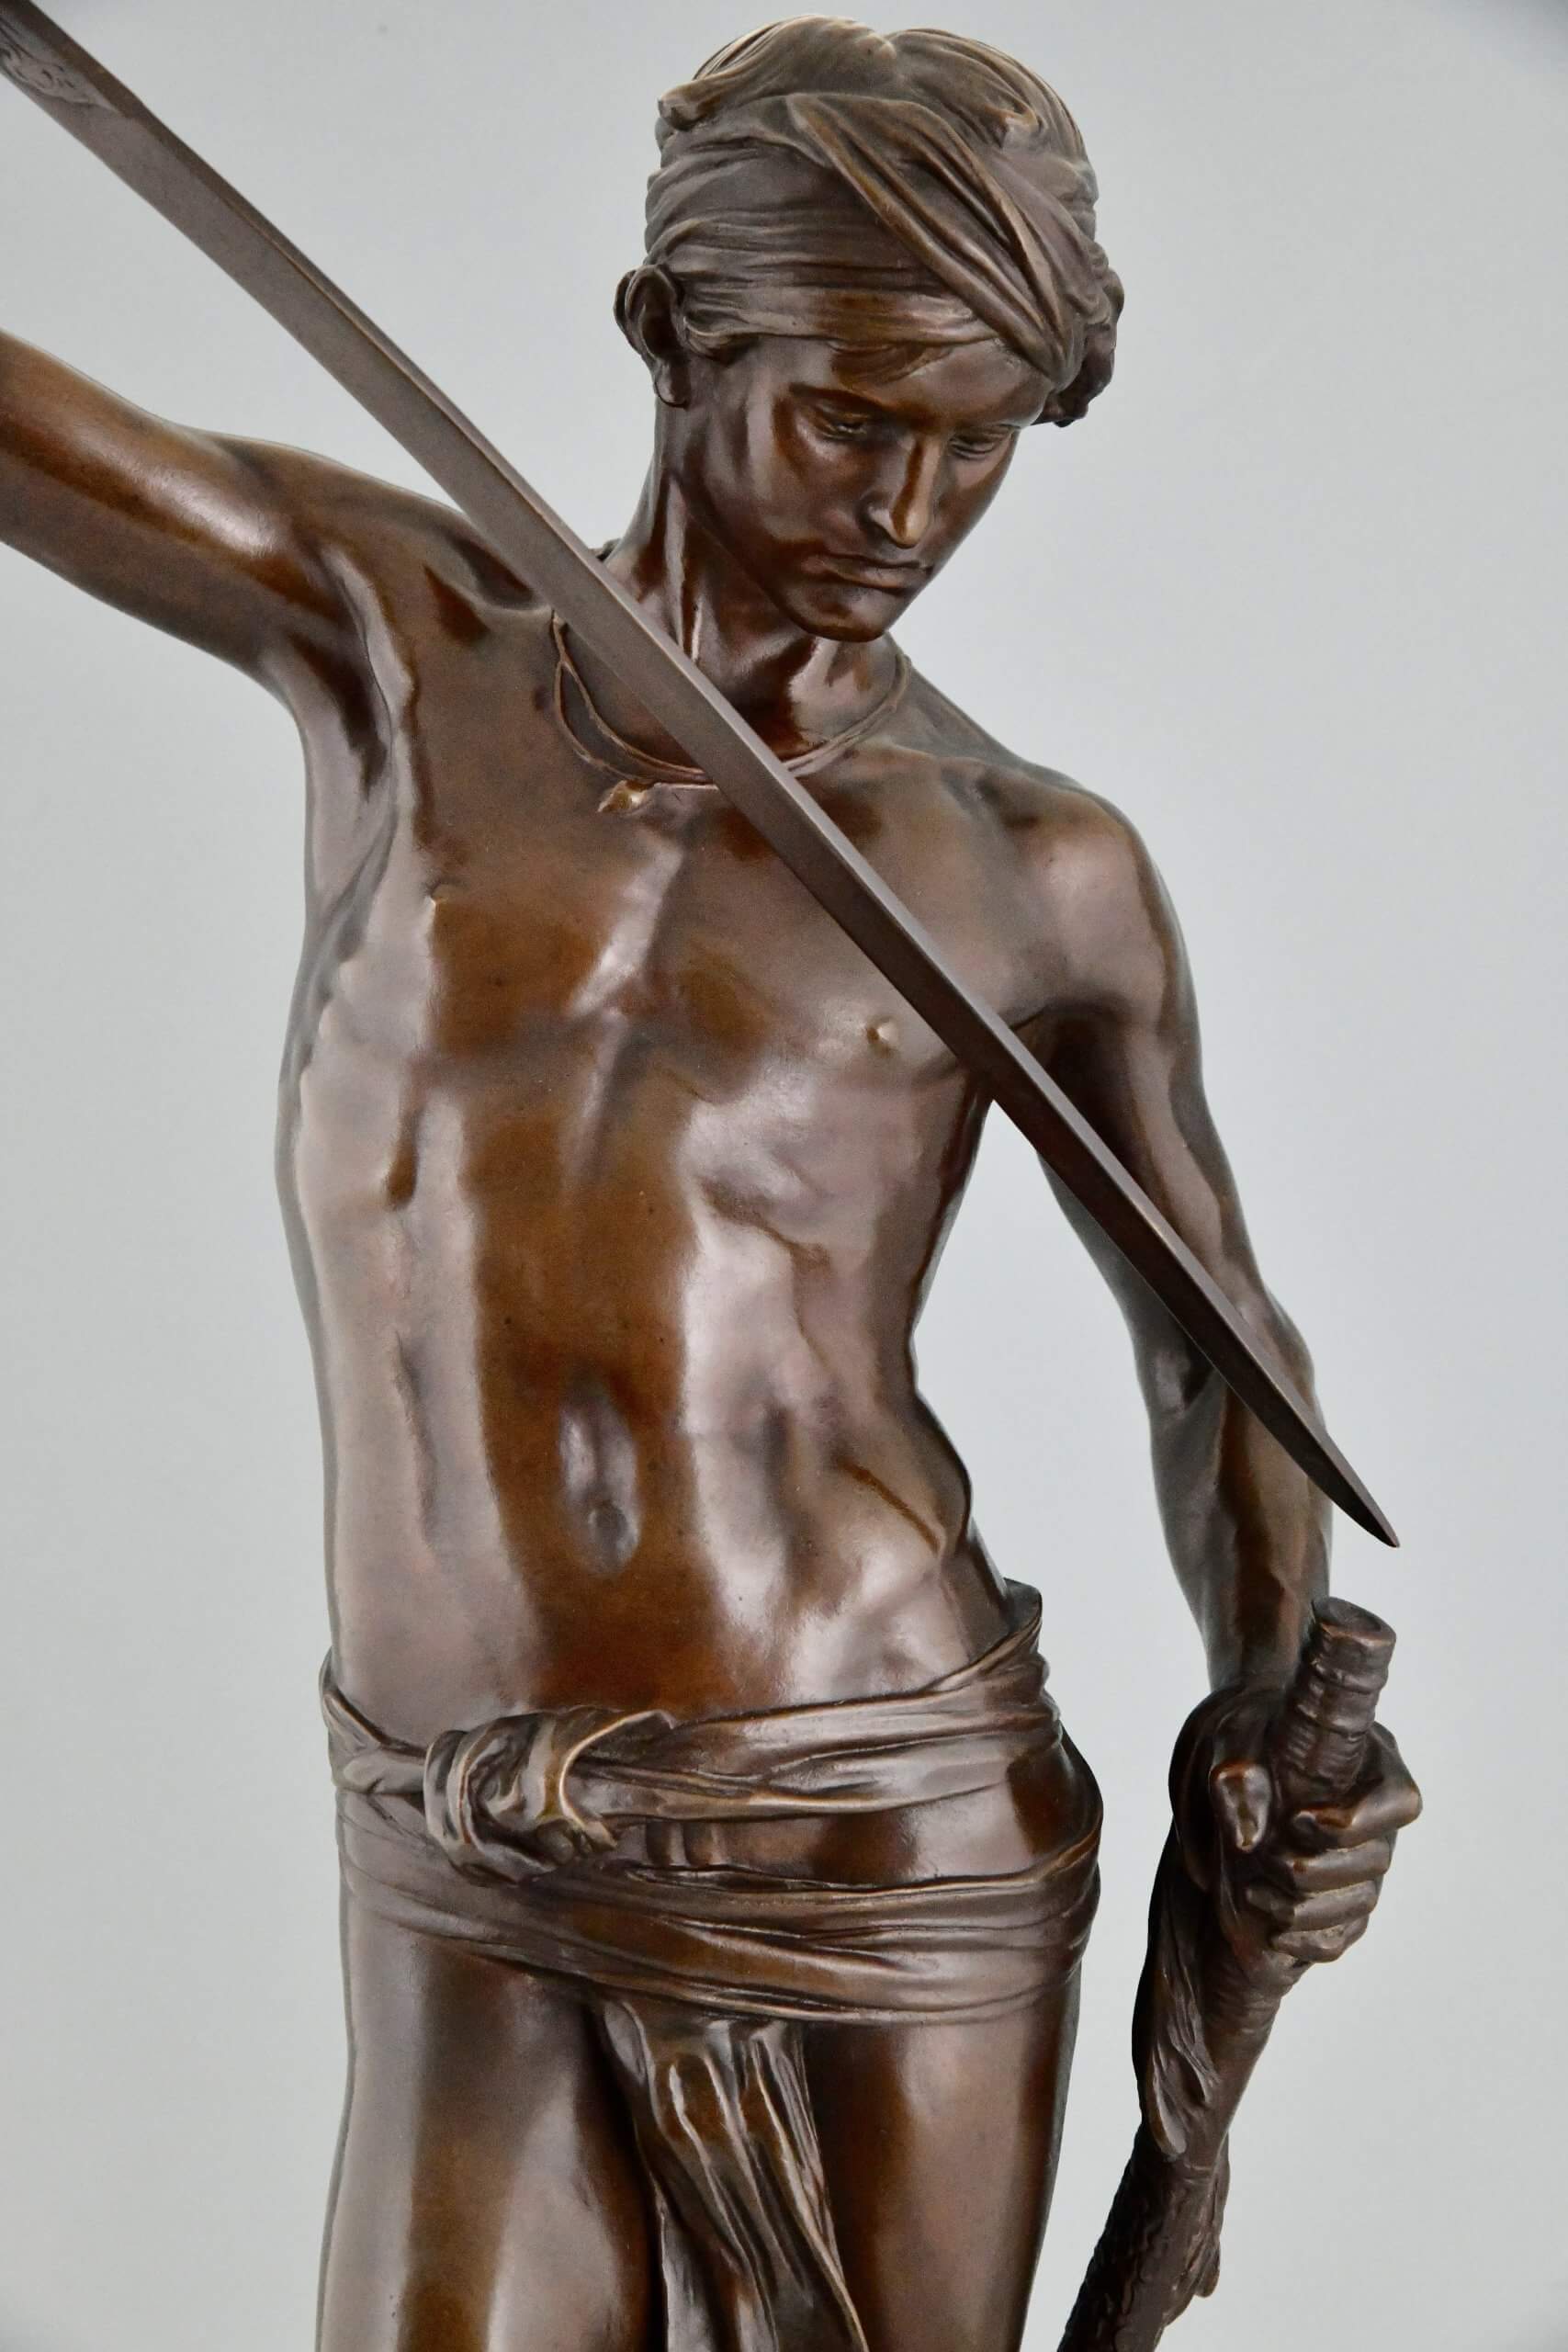 Antique bronze sculpture David after the combat.